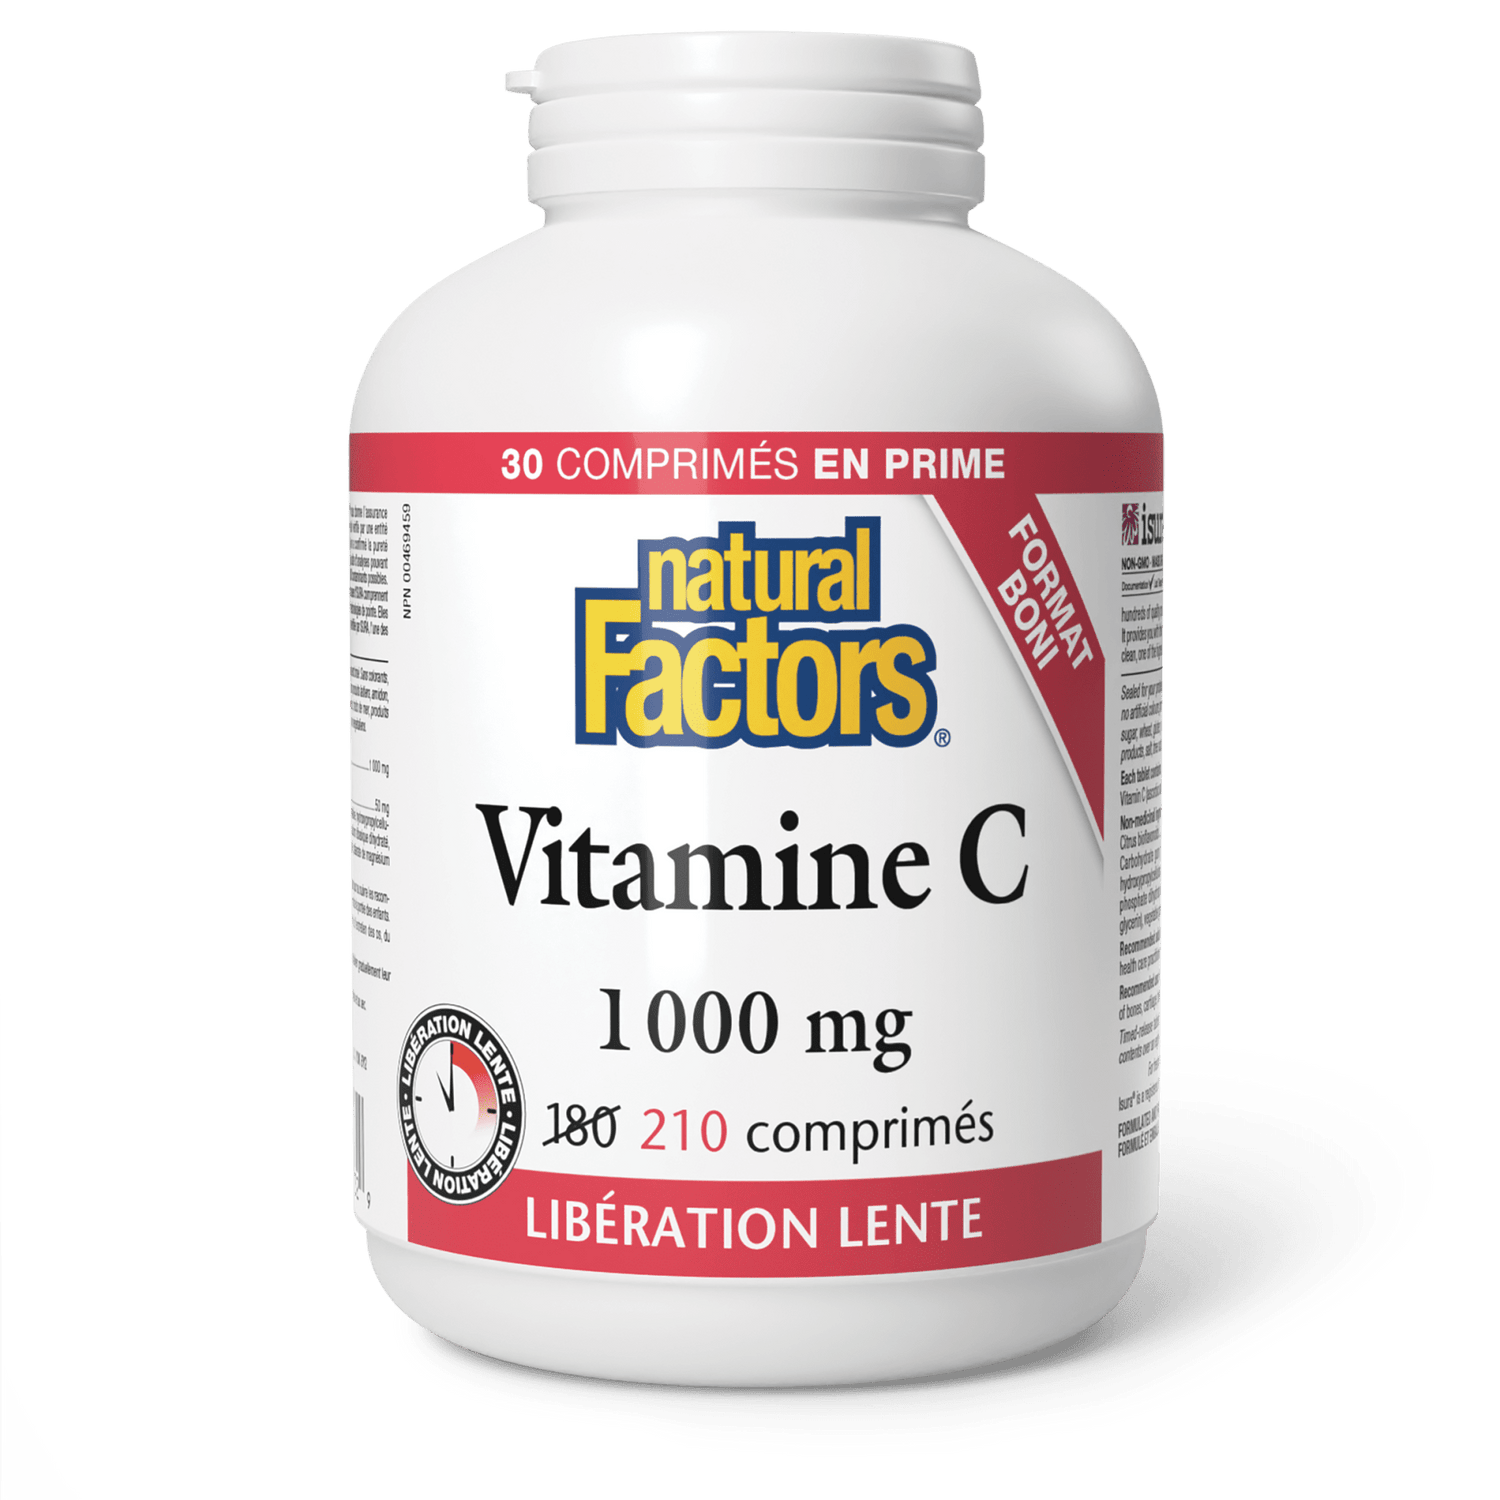 Vitamine C Libération lente 1 000 mg, Natural Factors|v|image|8132